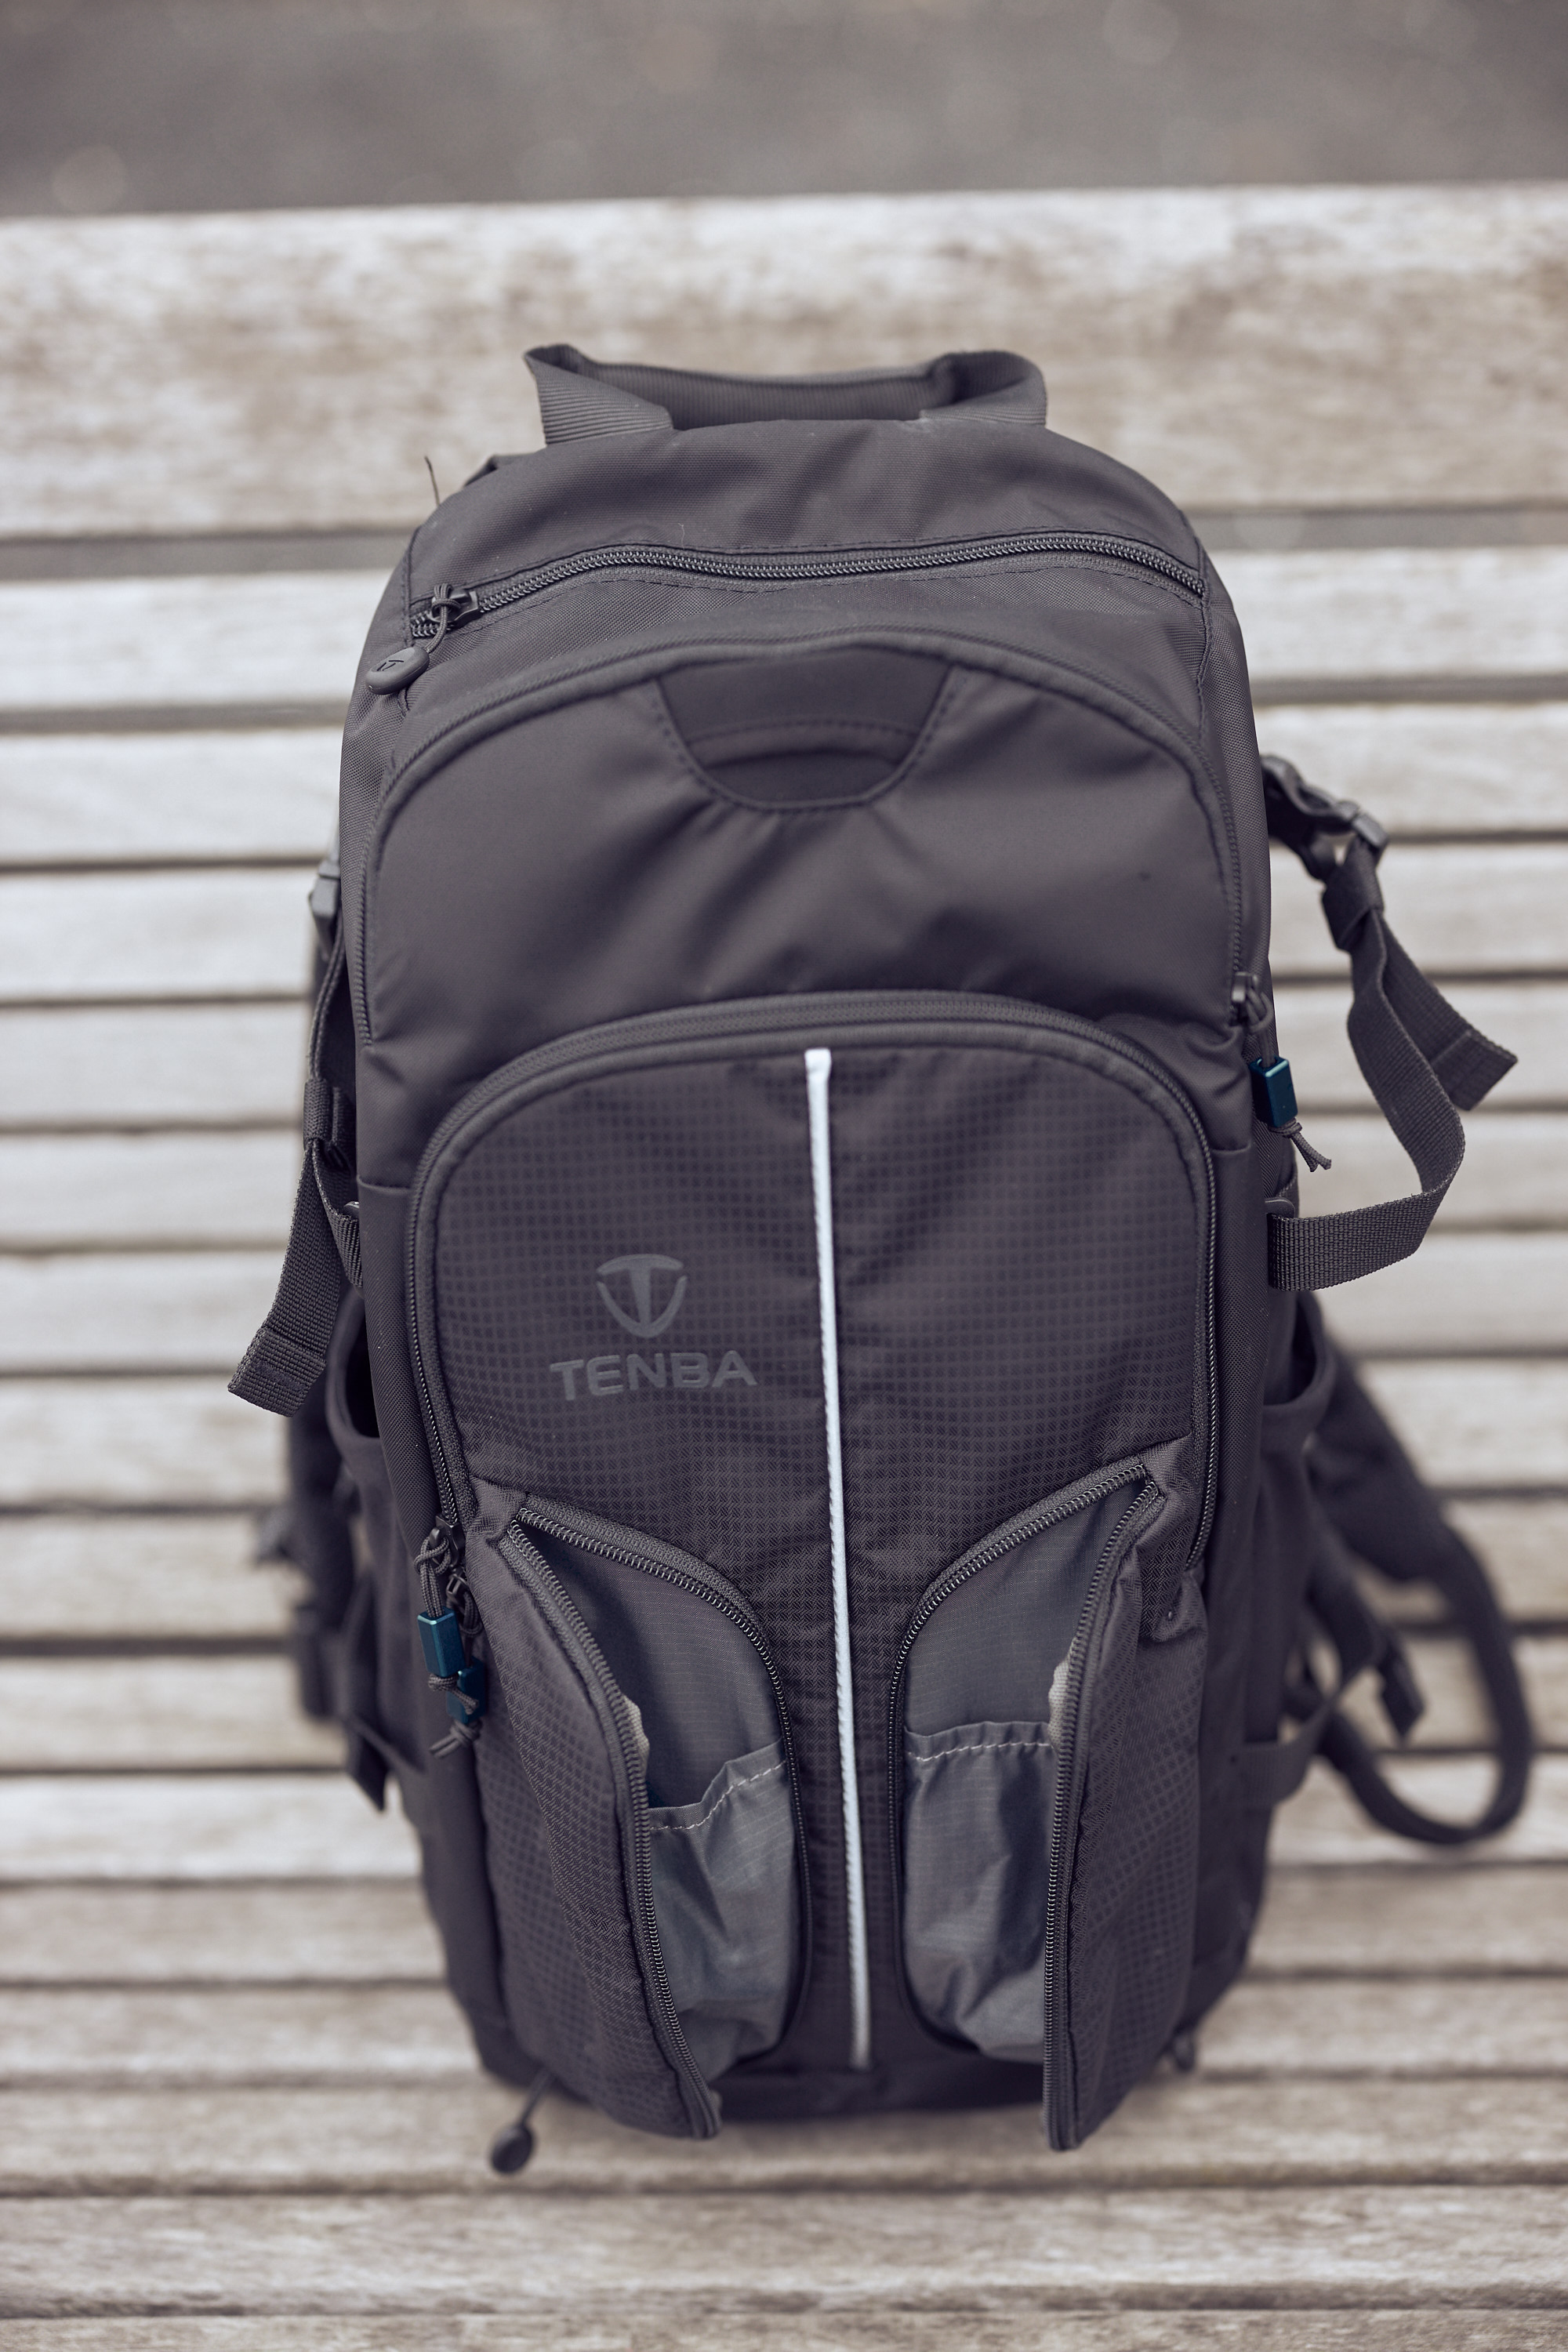 Review: Tenba DSLR Backpack Bag) In-Between Shootout 16L (The